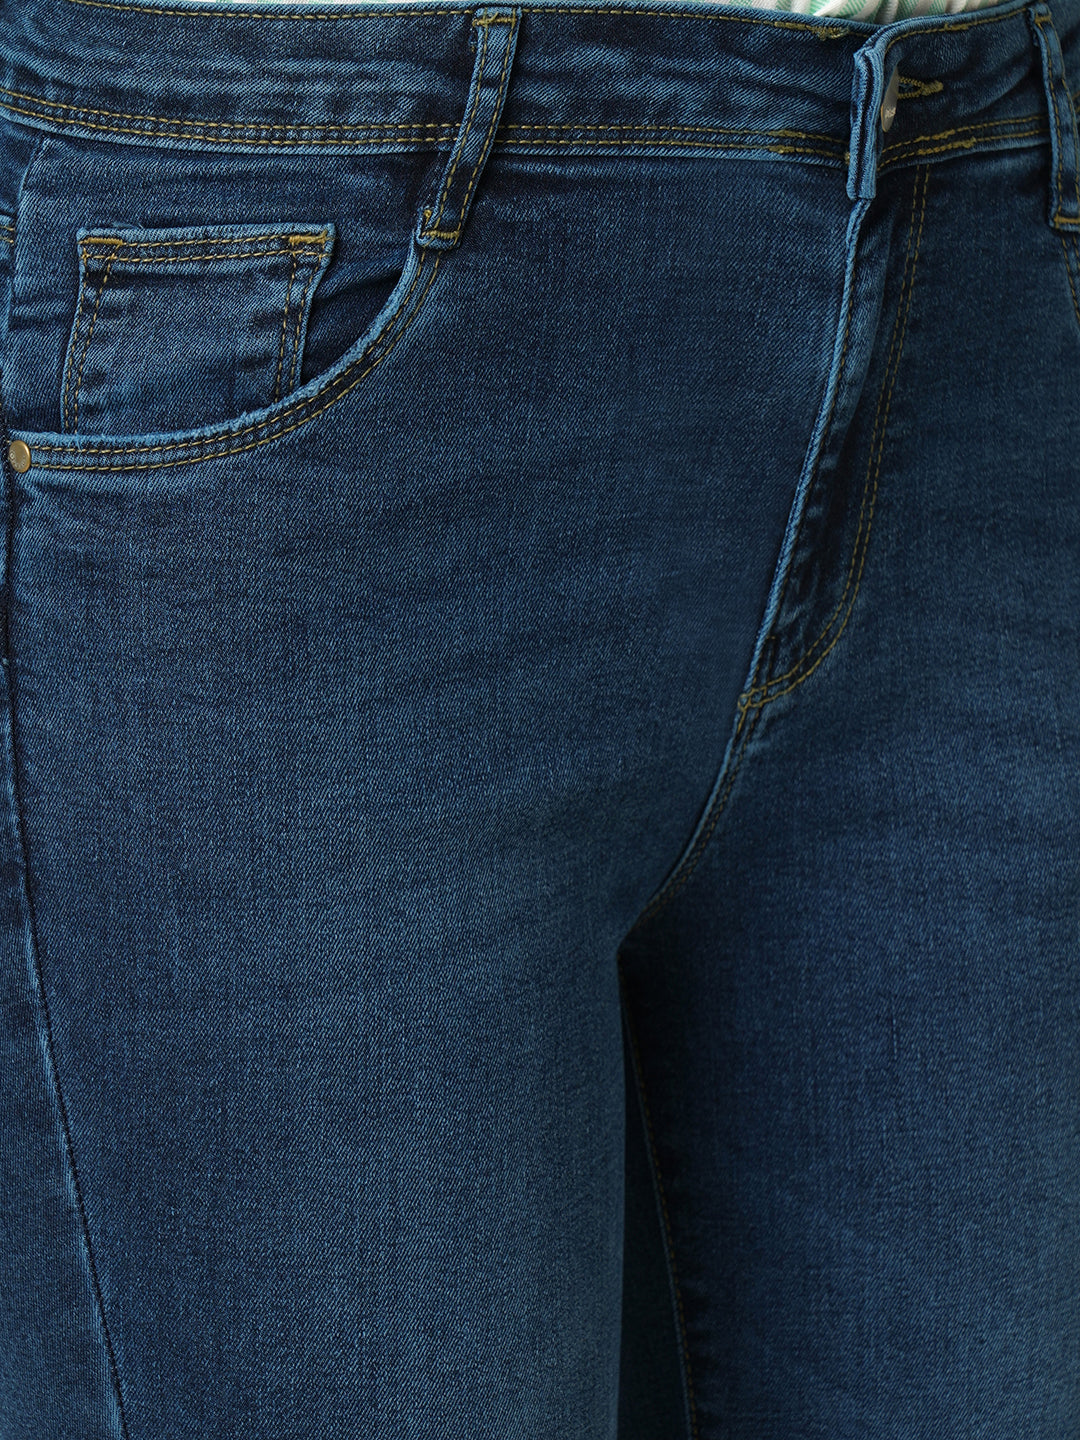 Women Mid-Rise Push Up Super Skinny Jeans